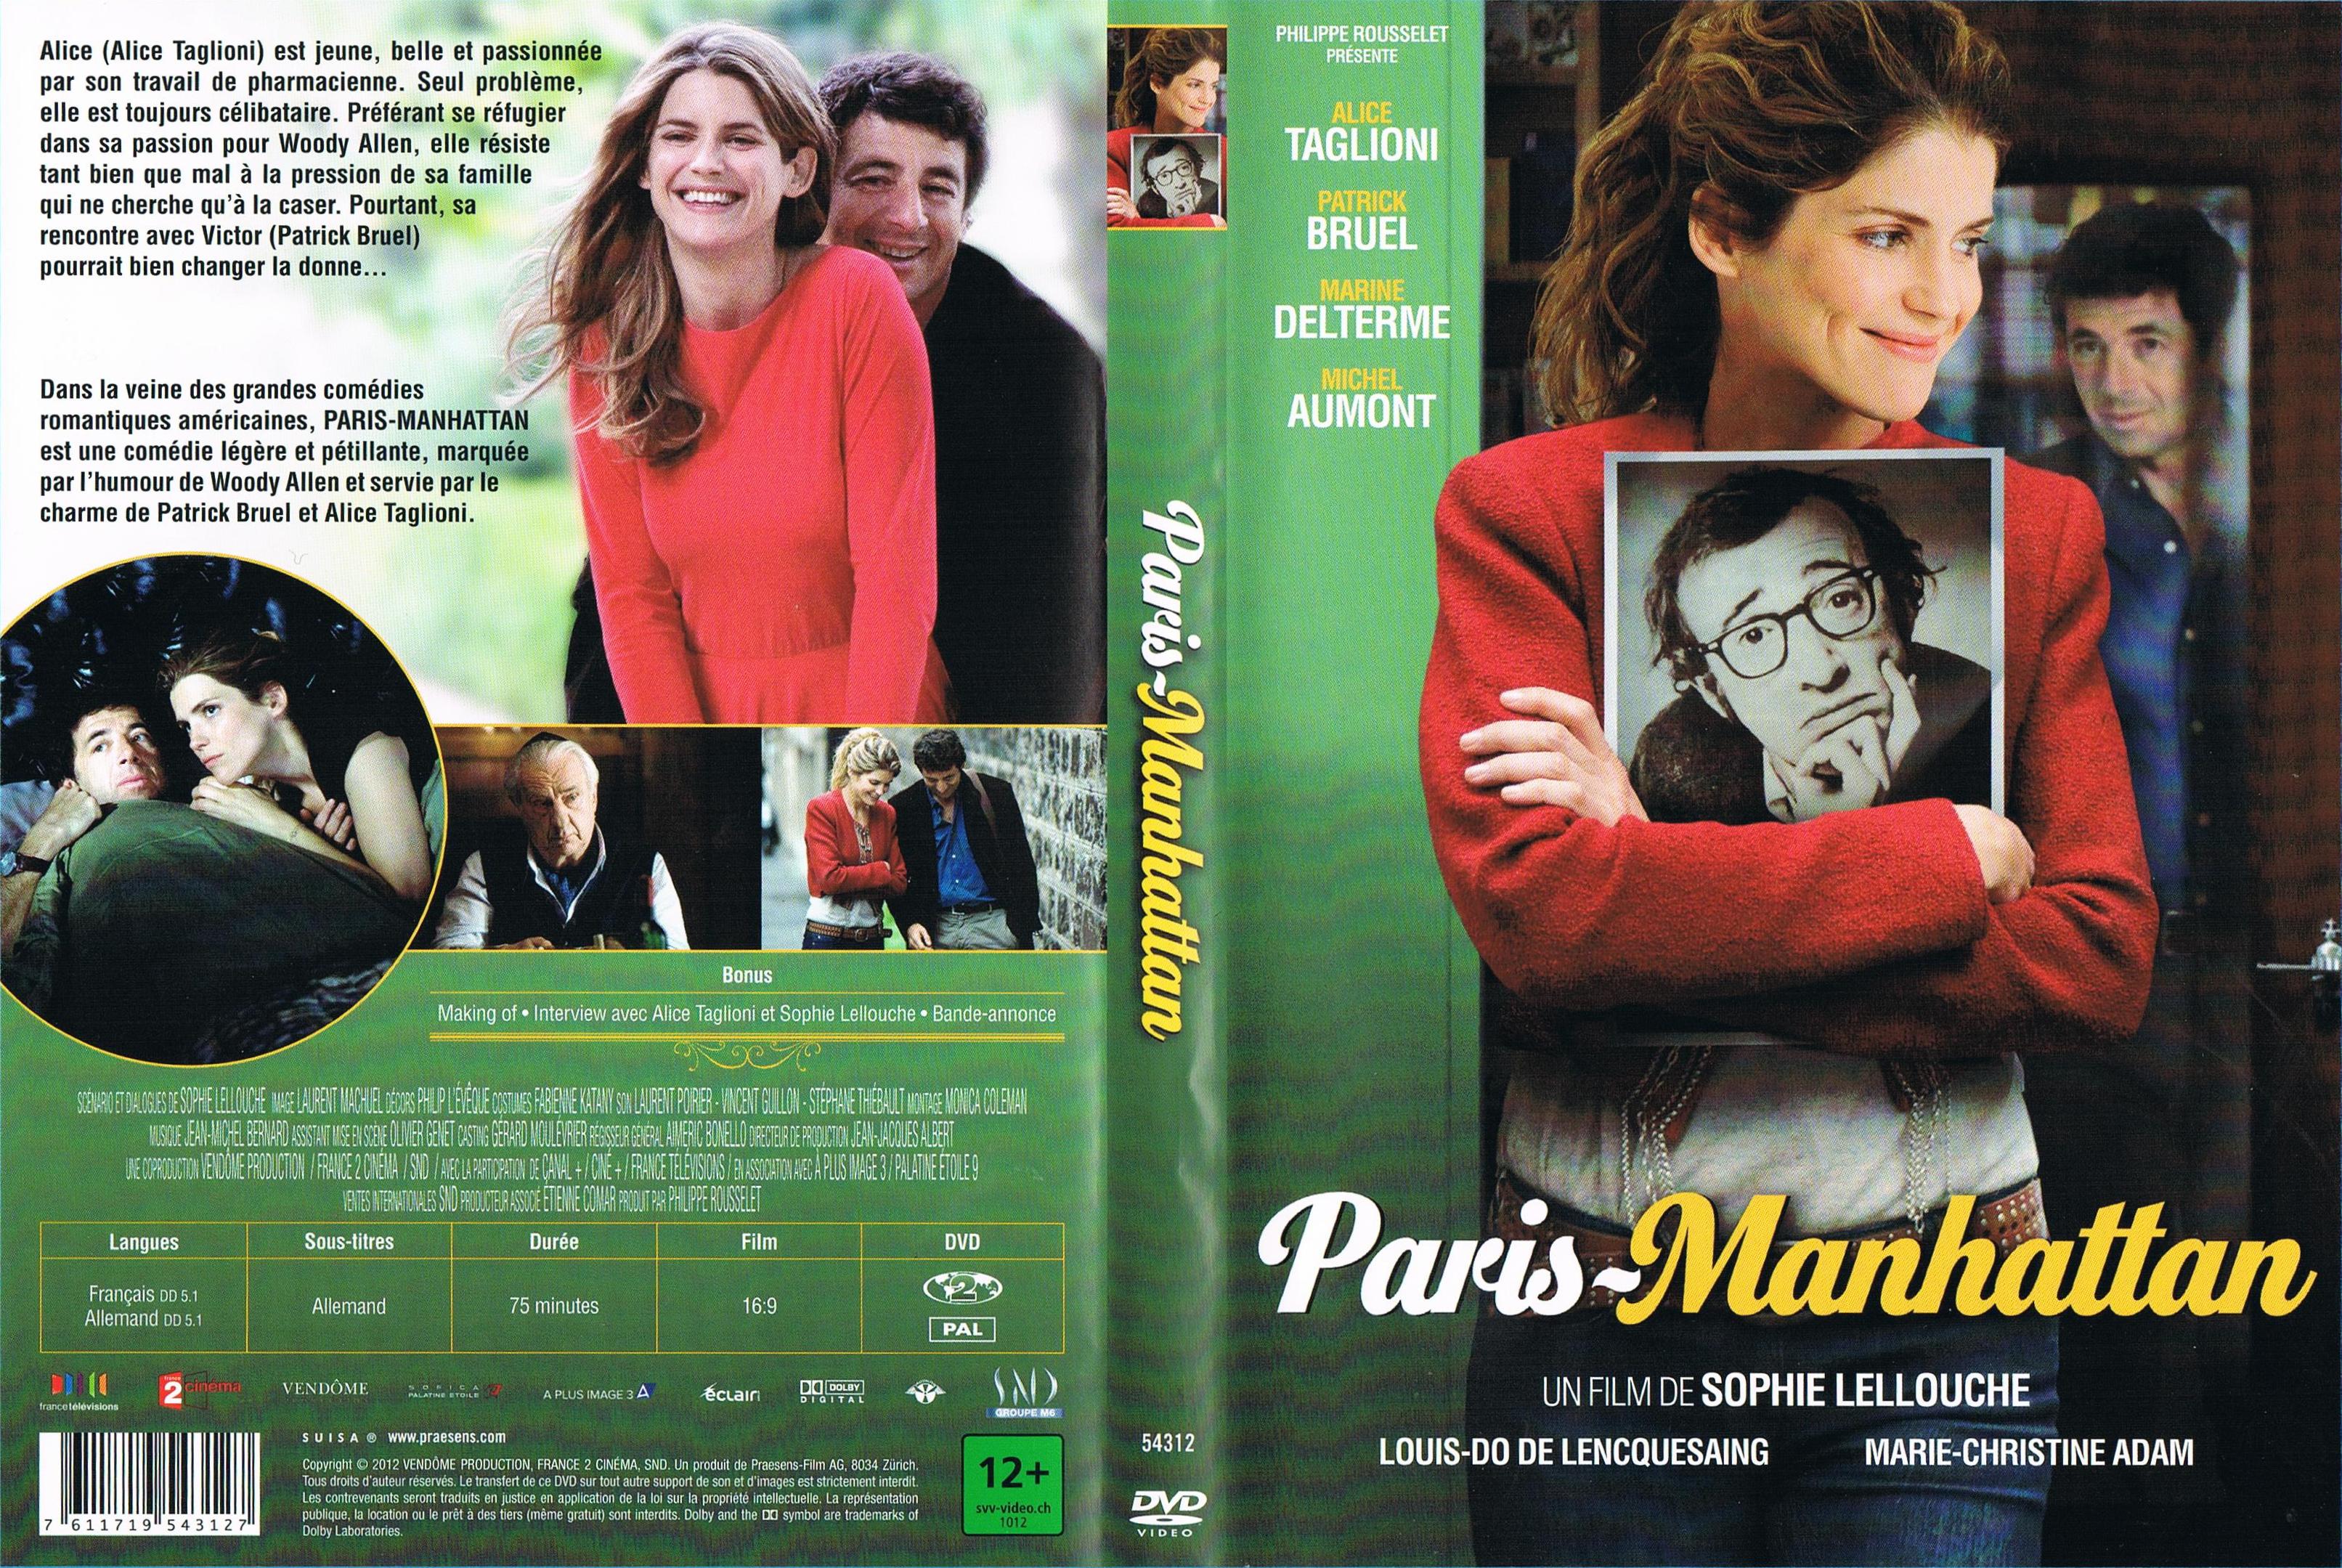 Jaquette DVD Paris-Manhattan v2